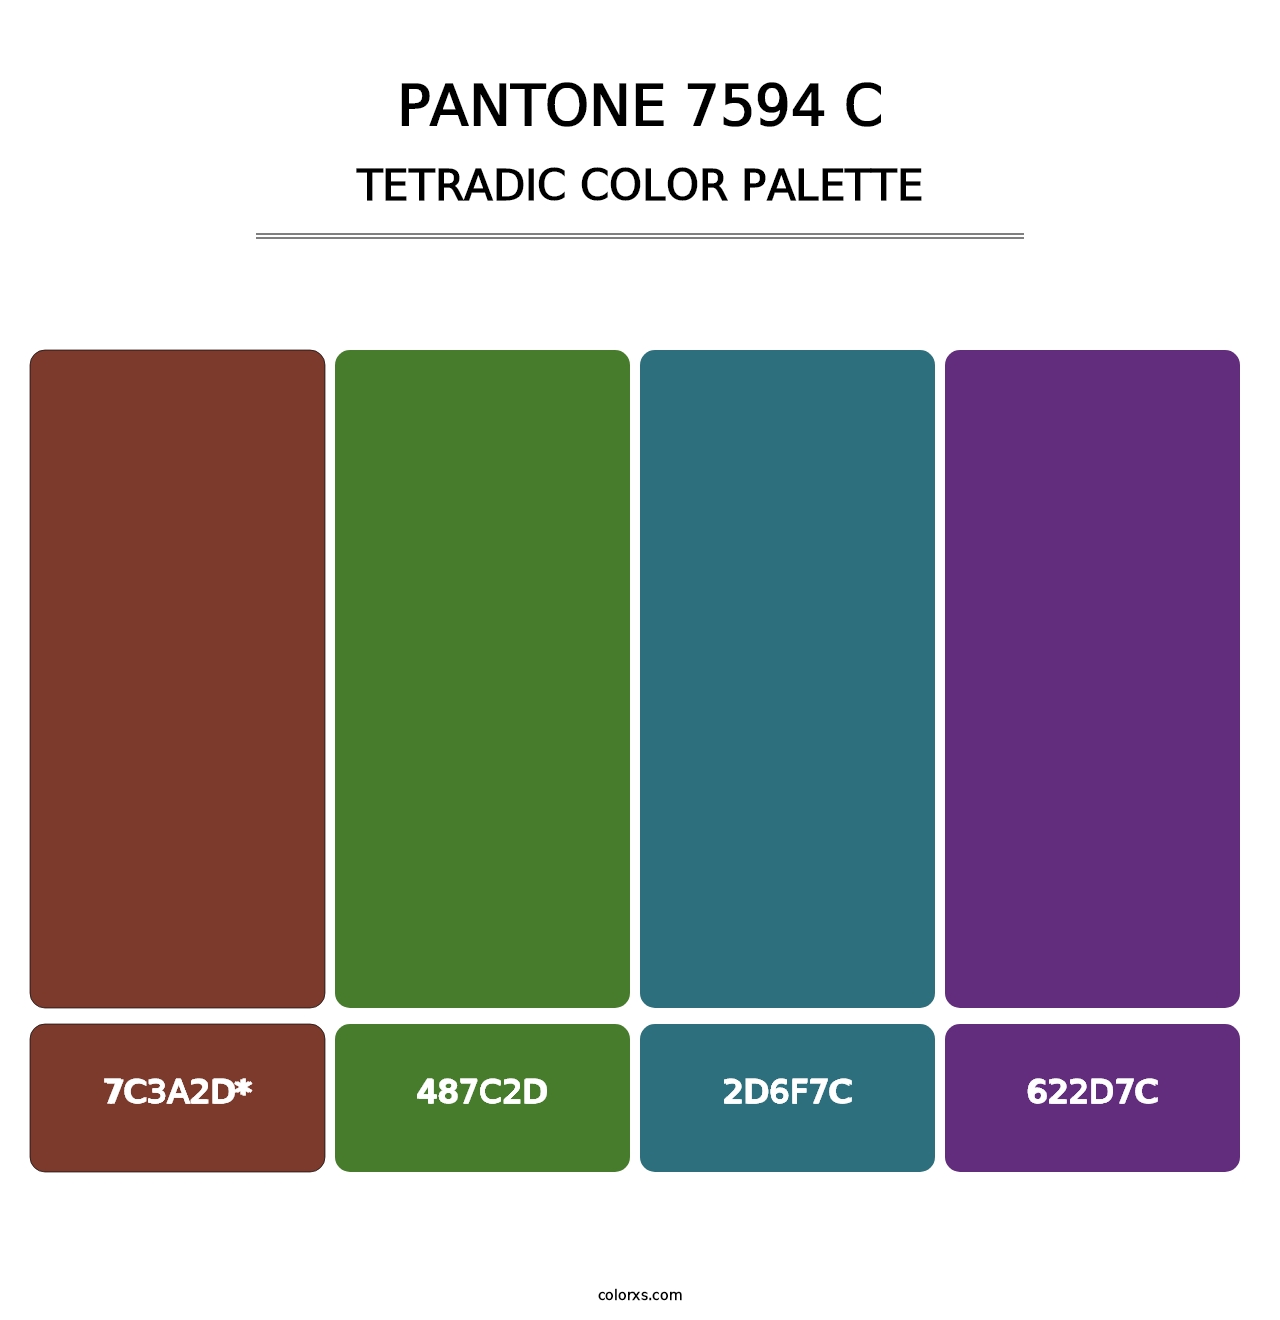 PANTONE 7594 C - Tetradic Color Palette